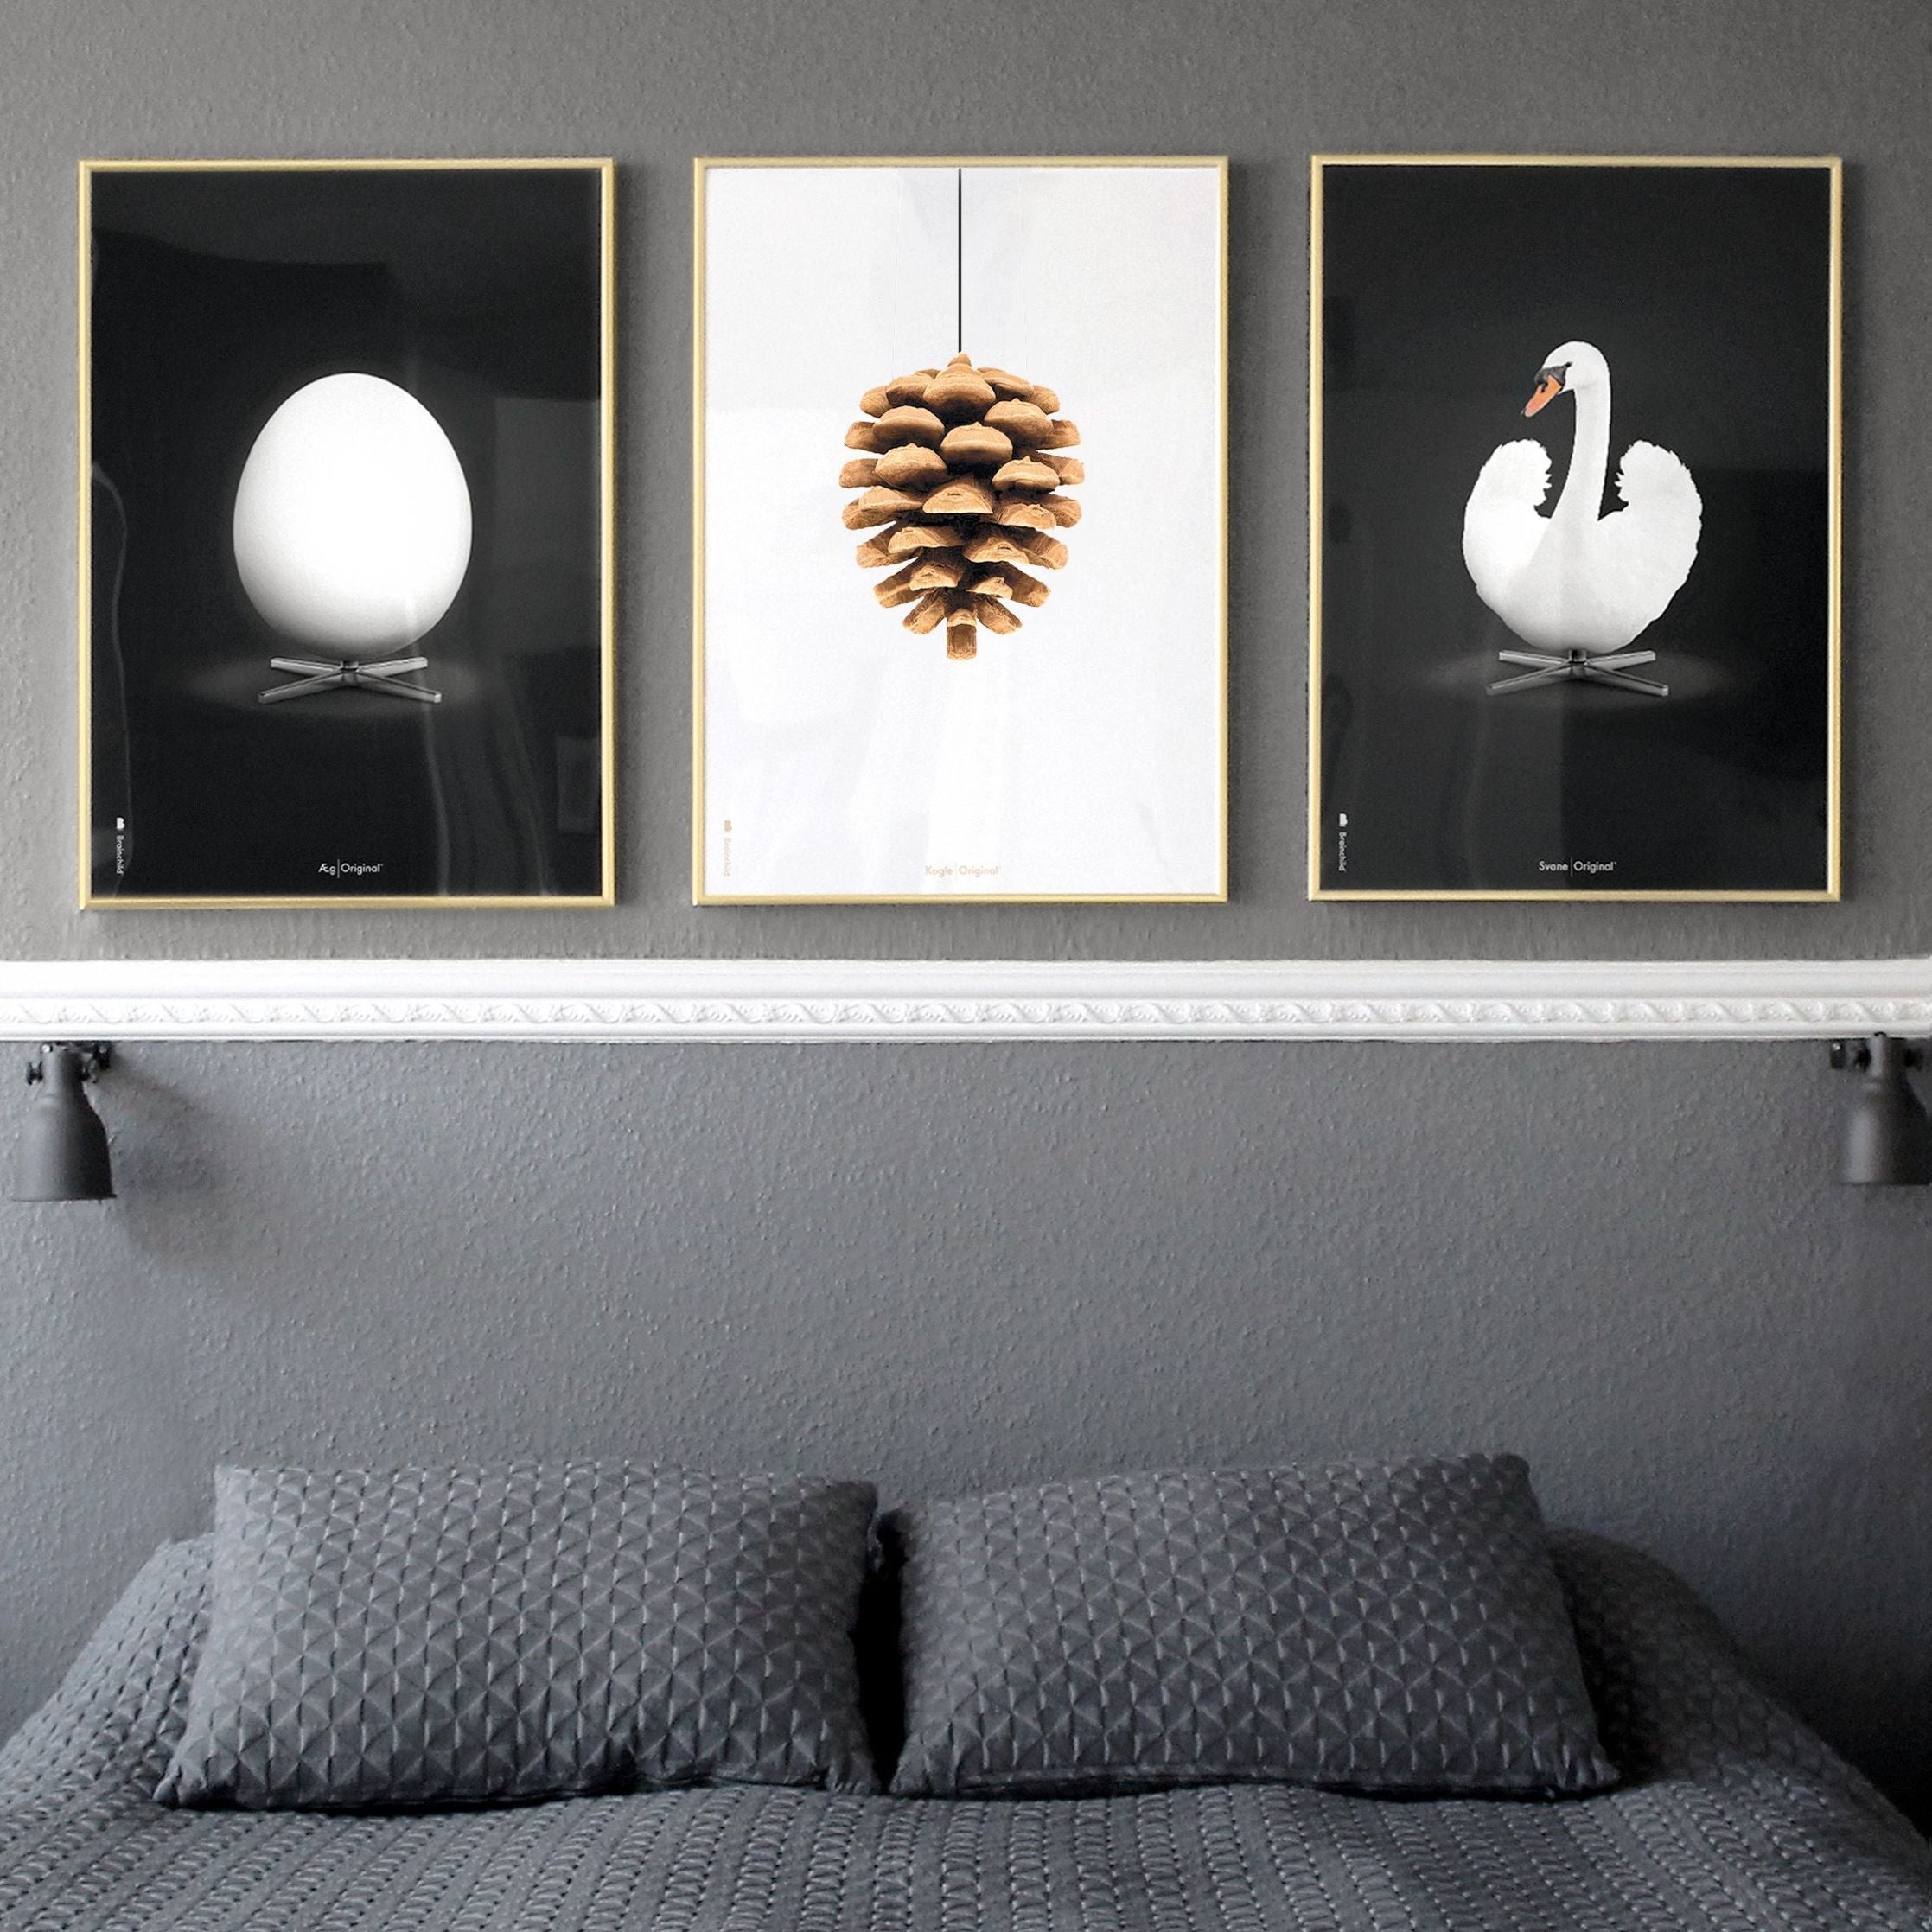 Brainchild Egg Classic Poster, Frame Made Of Light Wood 30x40 Cm, Black Background